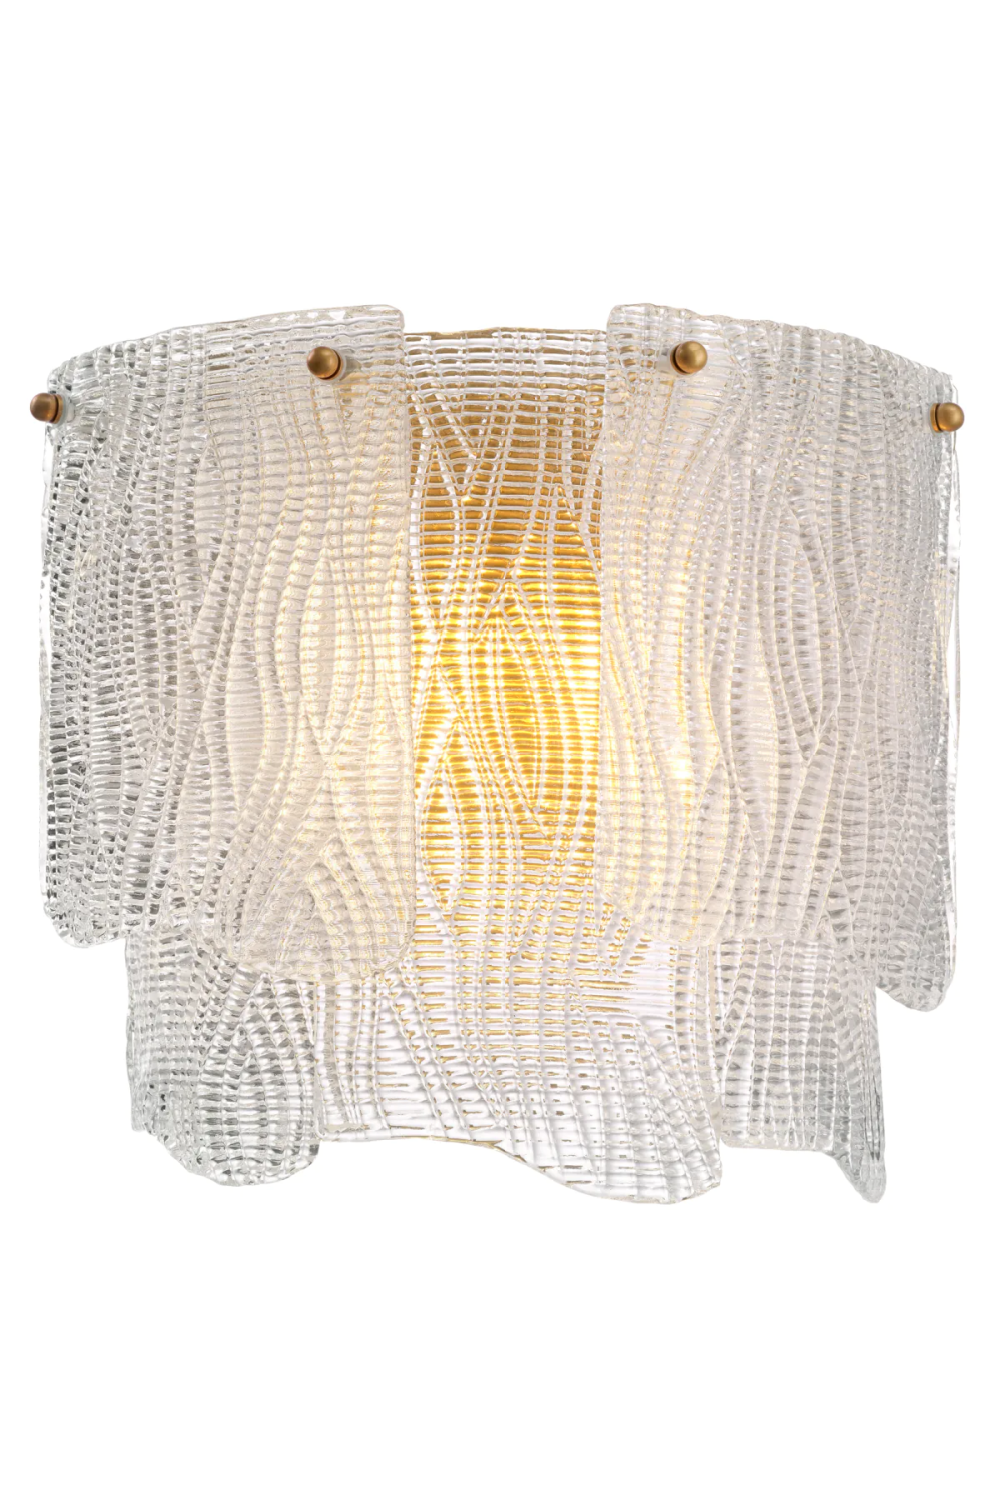 Glass Layered Wall Lamp | Eichholtz Asinara | Oroa.com